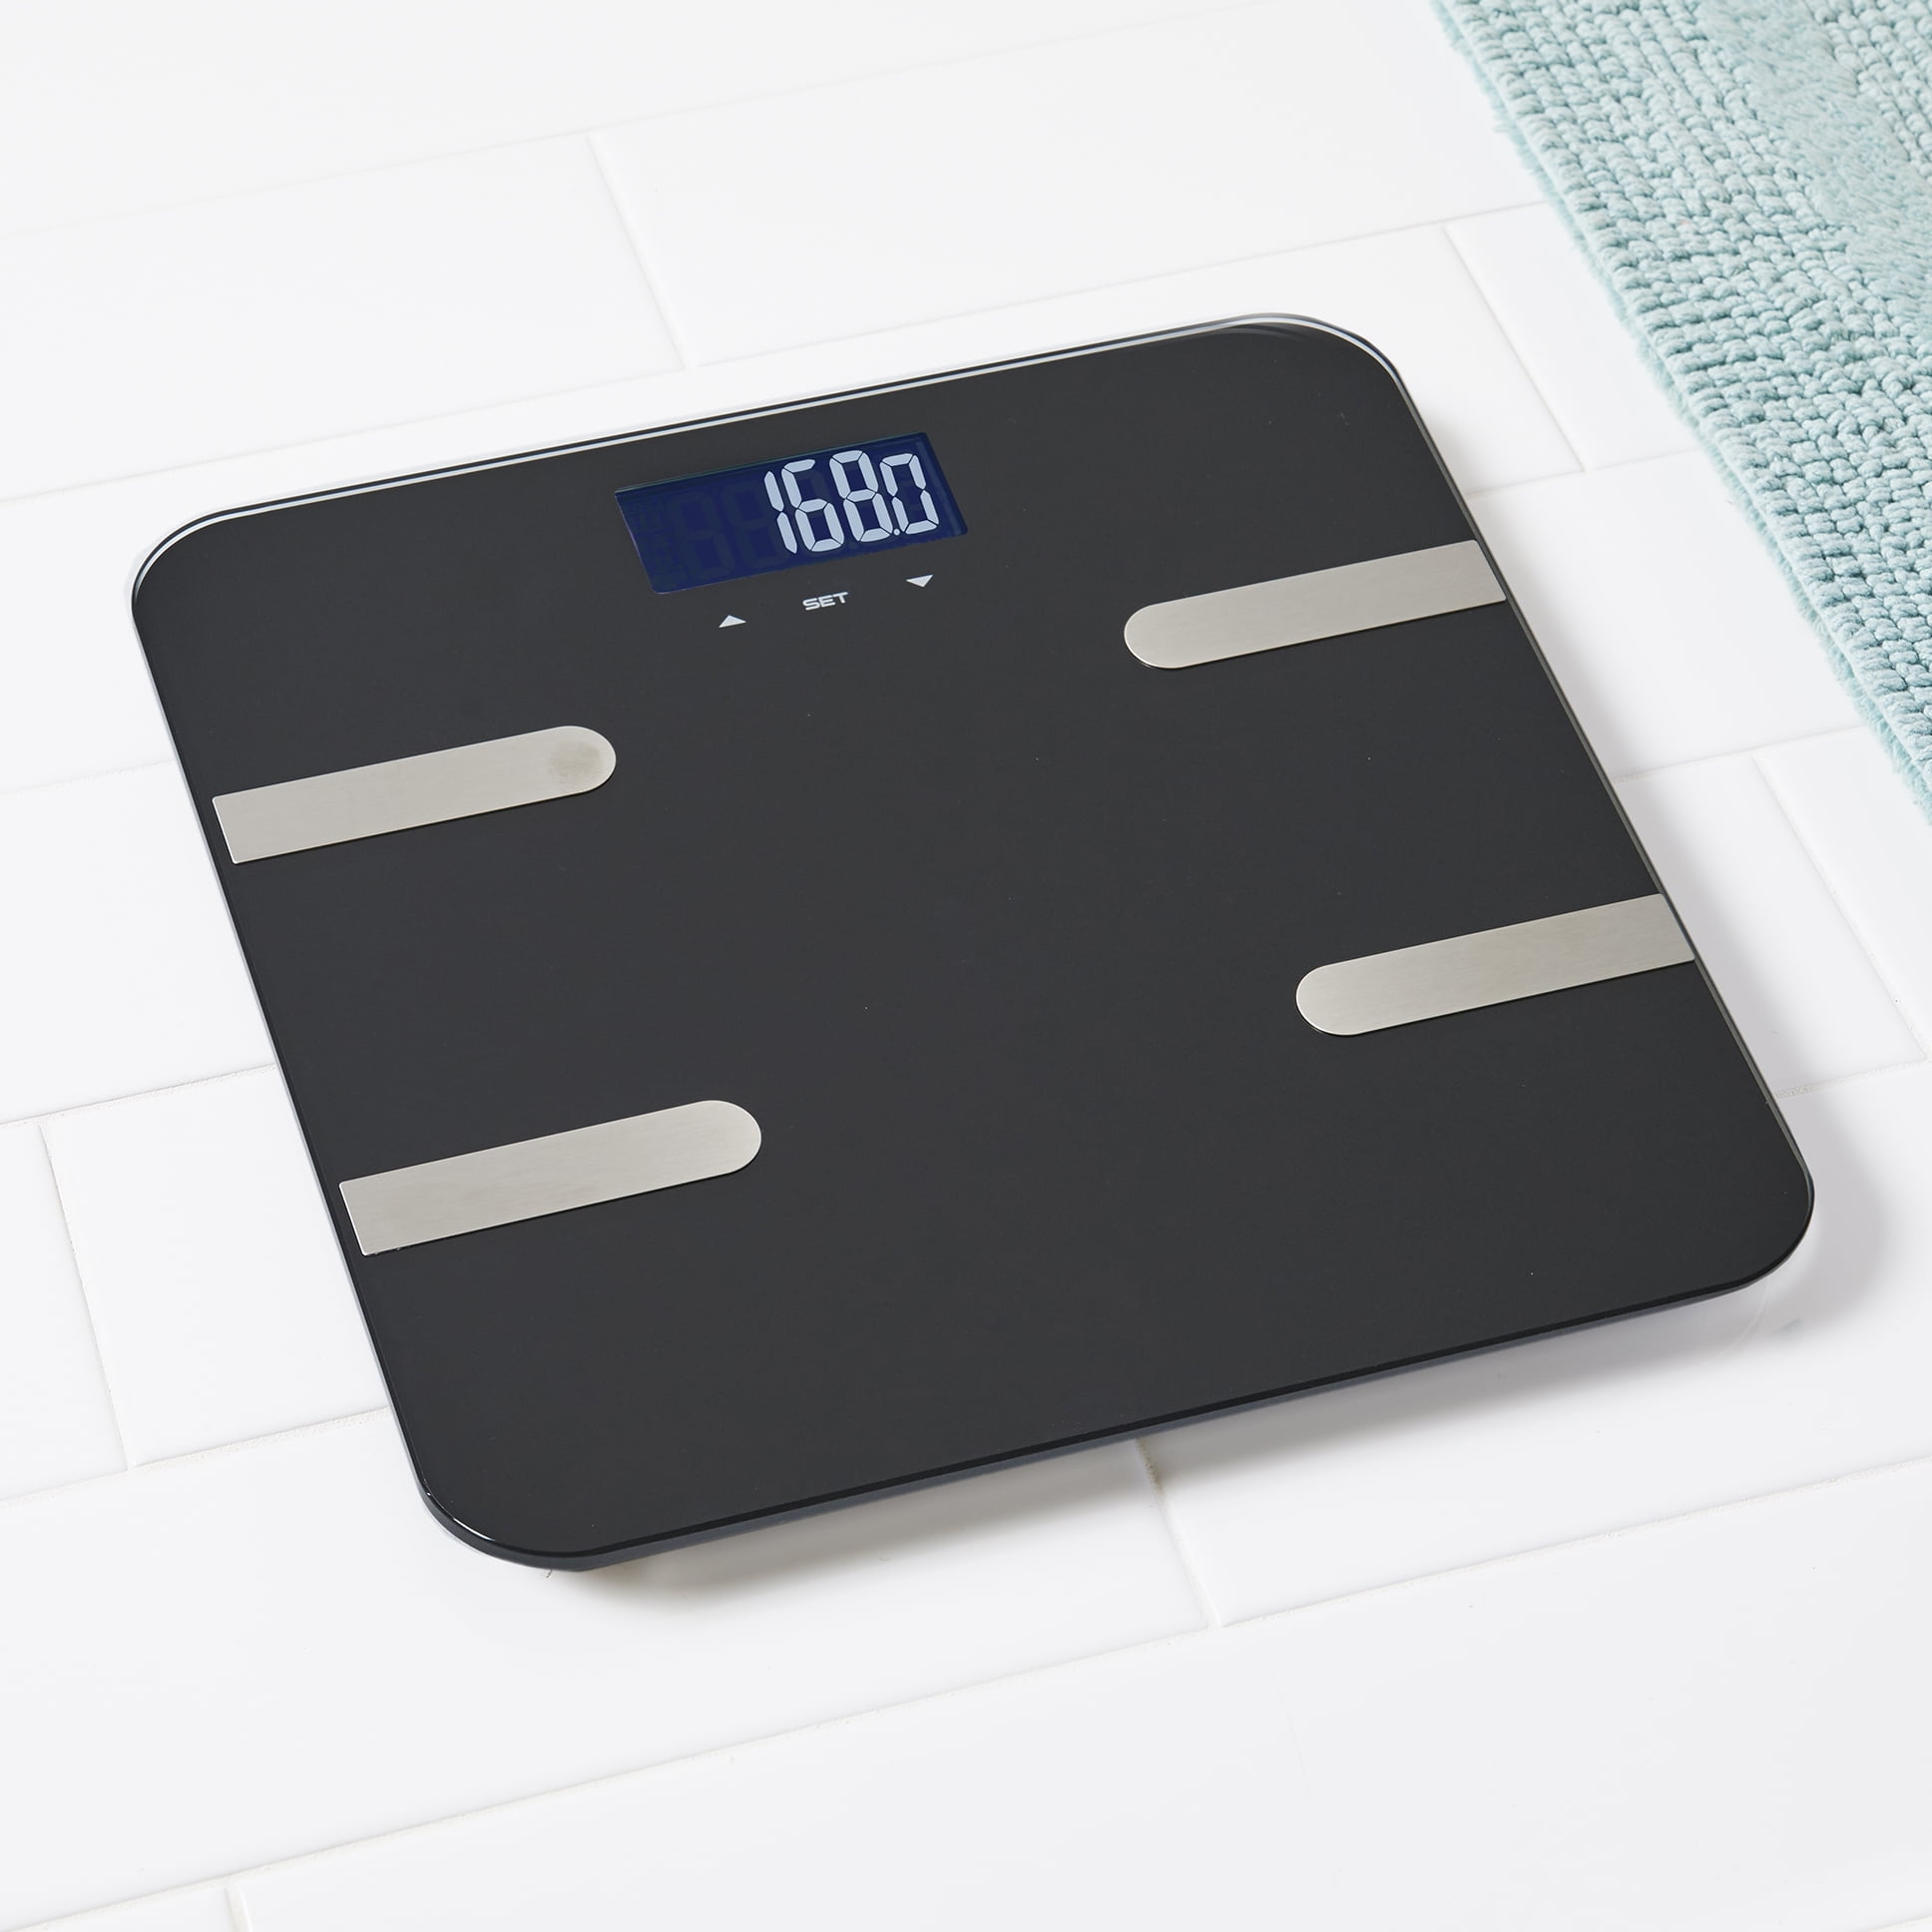 Best Bathroom Scales - Consumer Reports